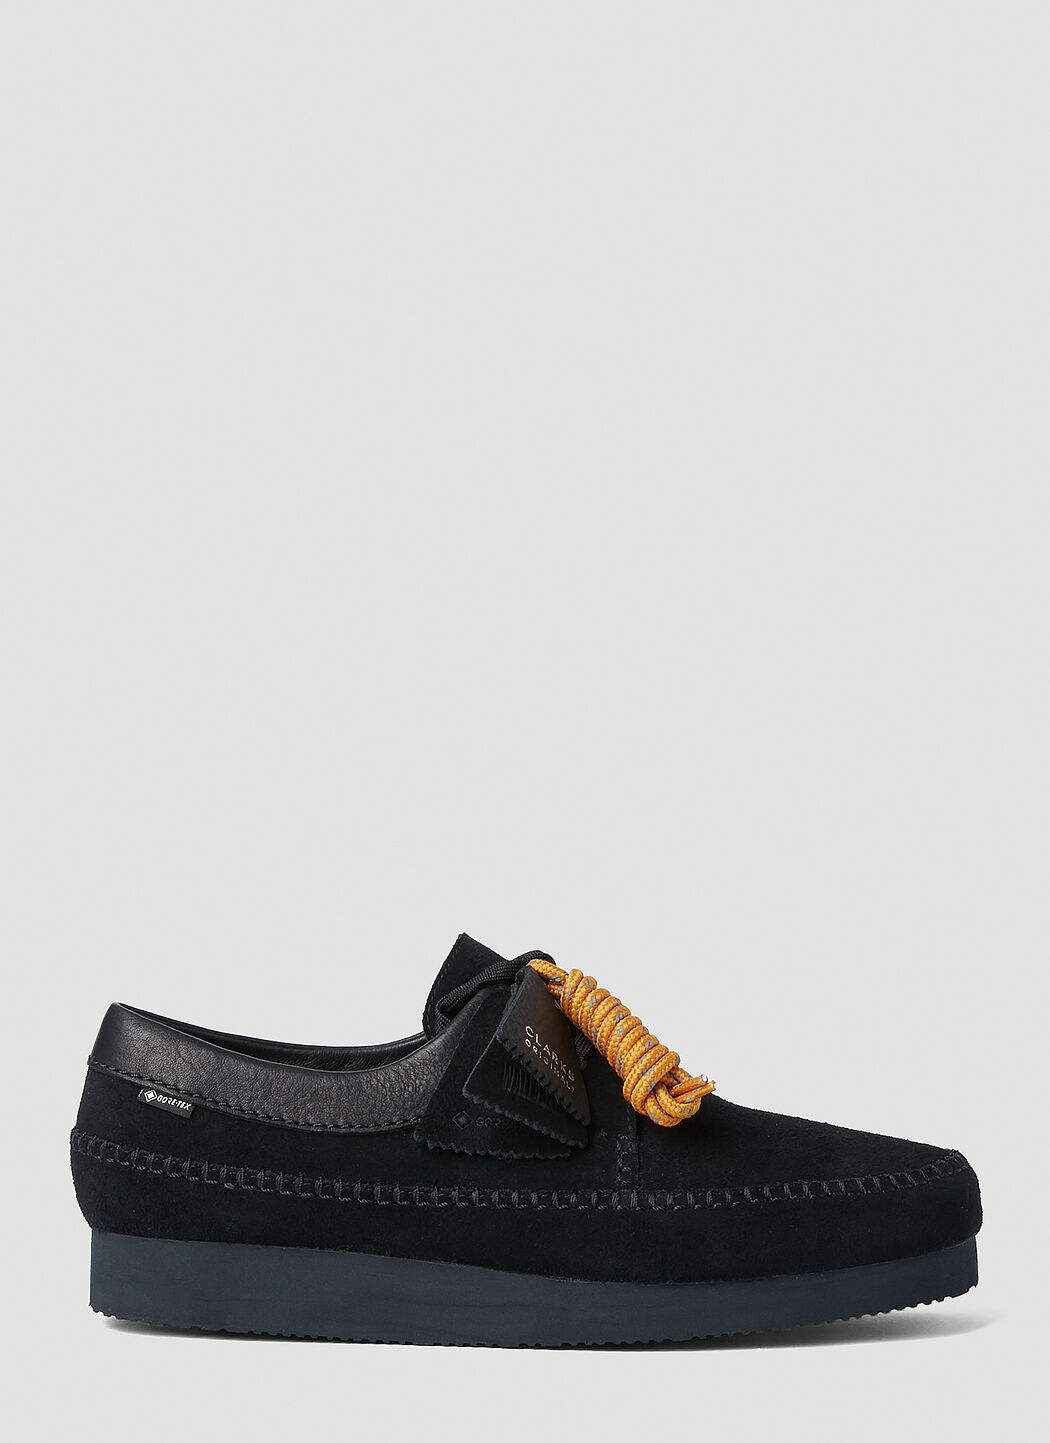 Weaver Shoes In Black